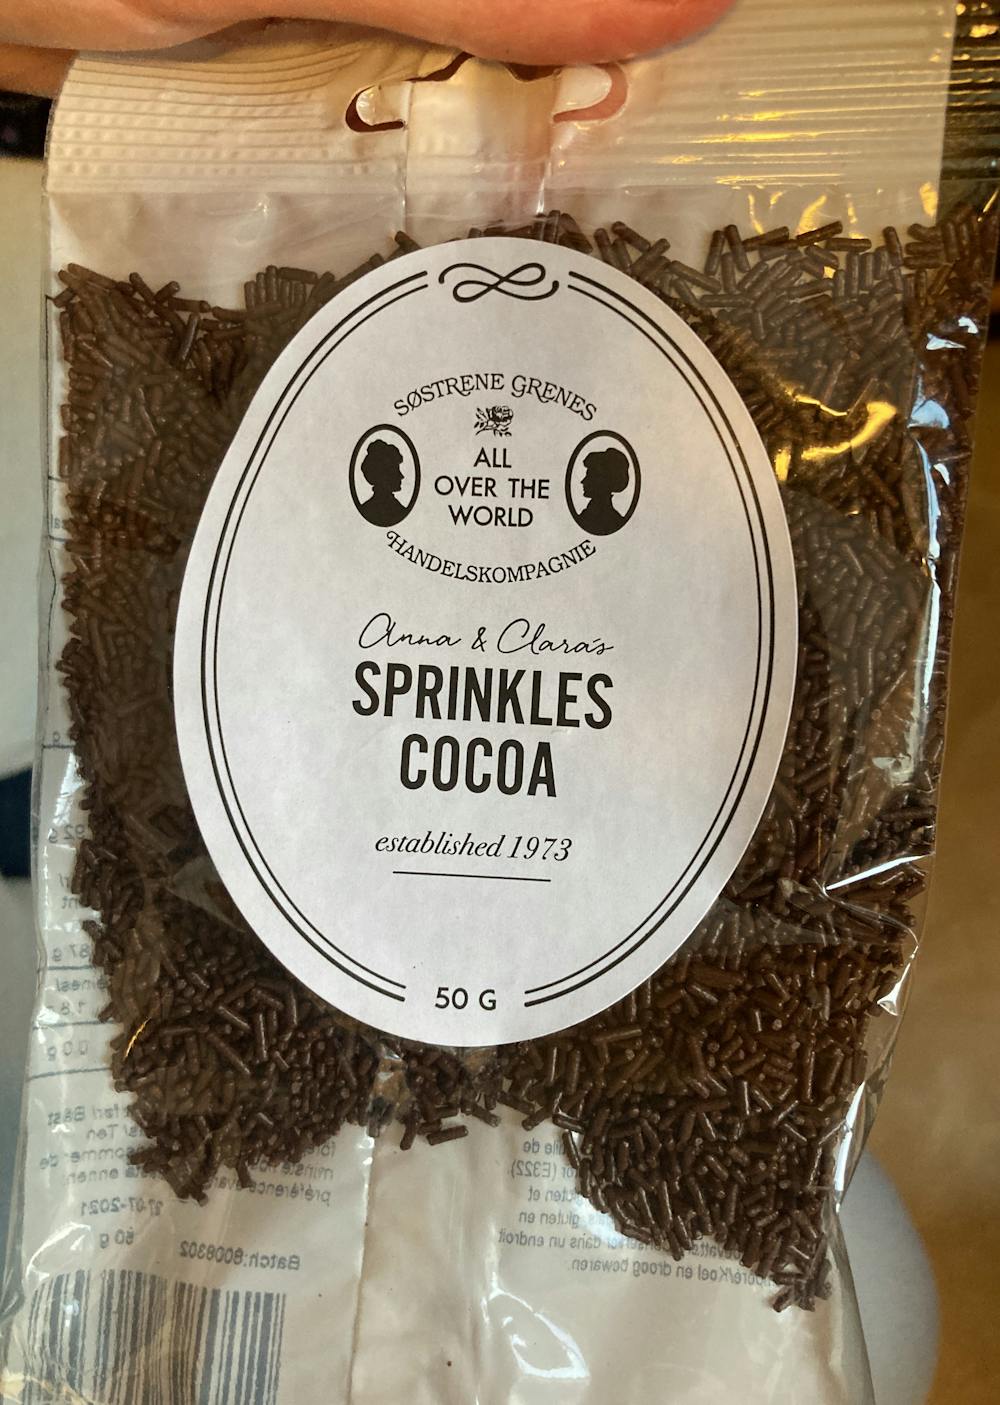 Sprinkles cocoa, Søstrene Grene